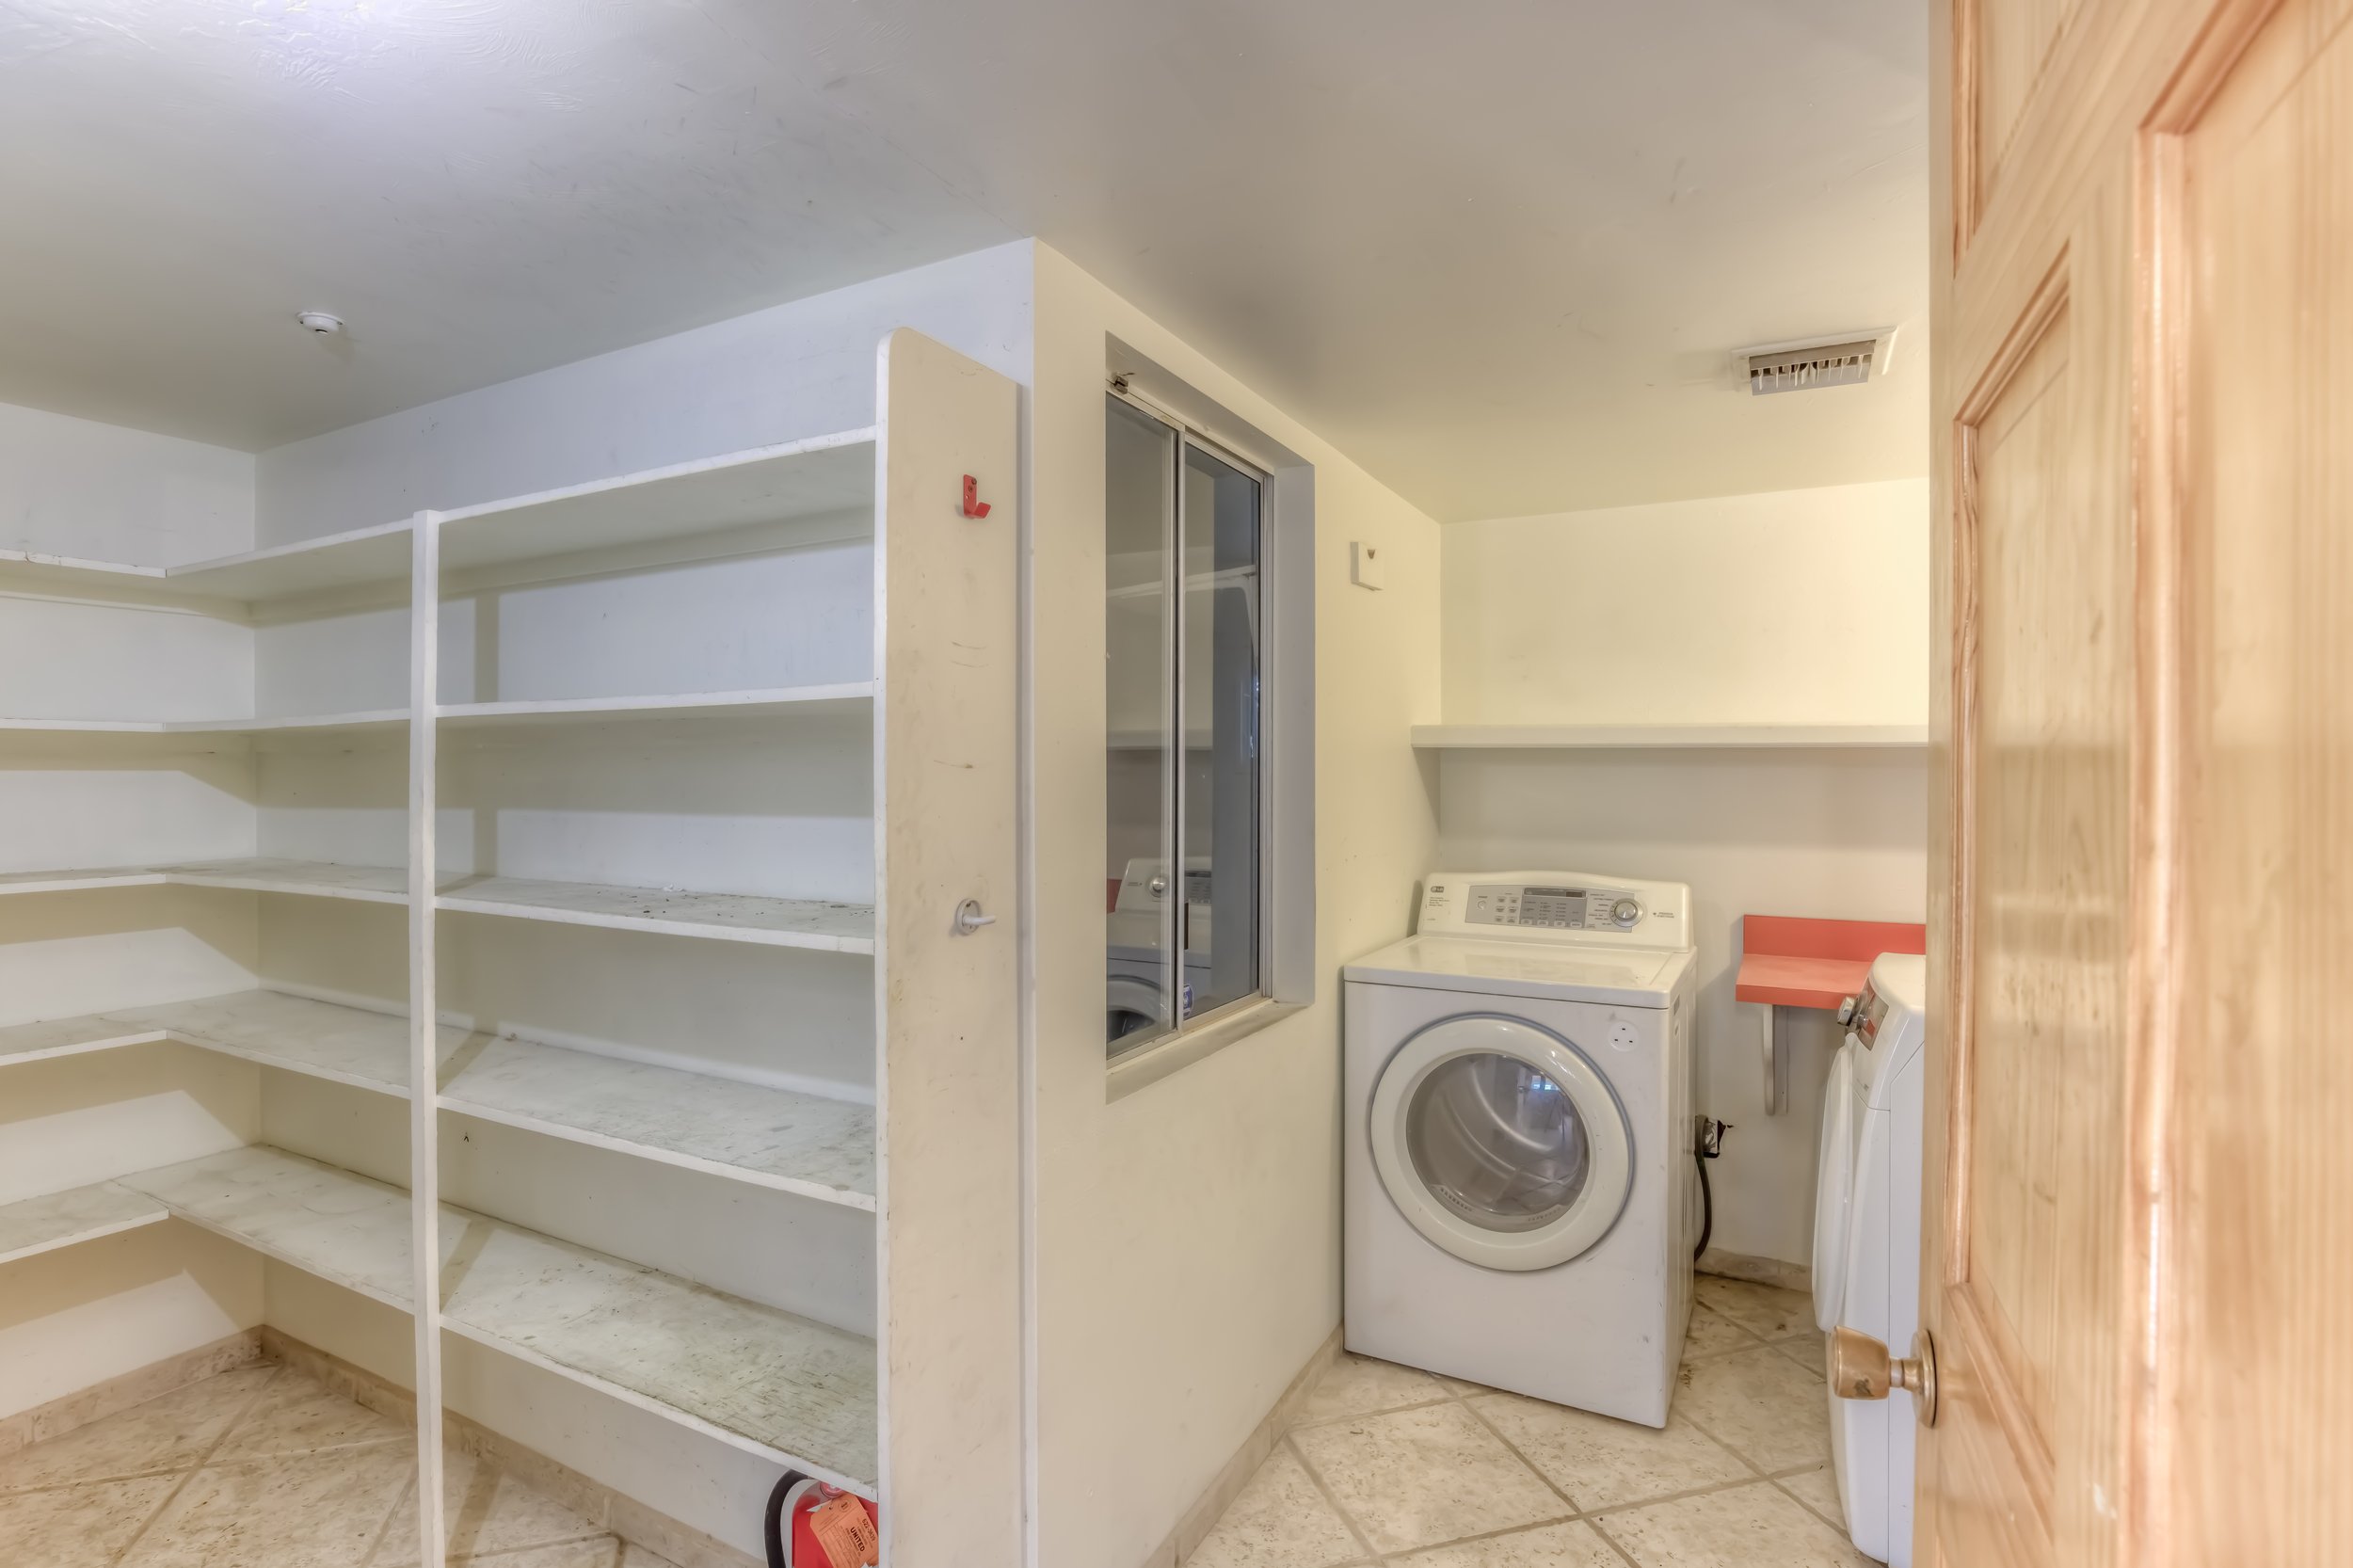 16 Laundry:Utility Room.jpg